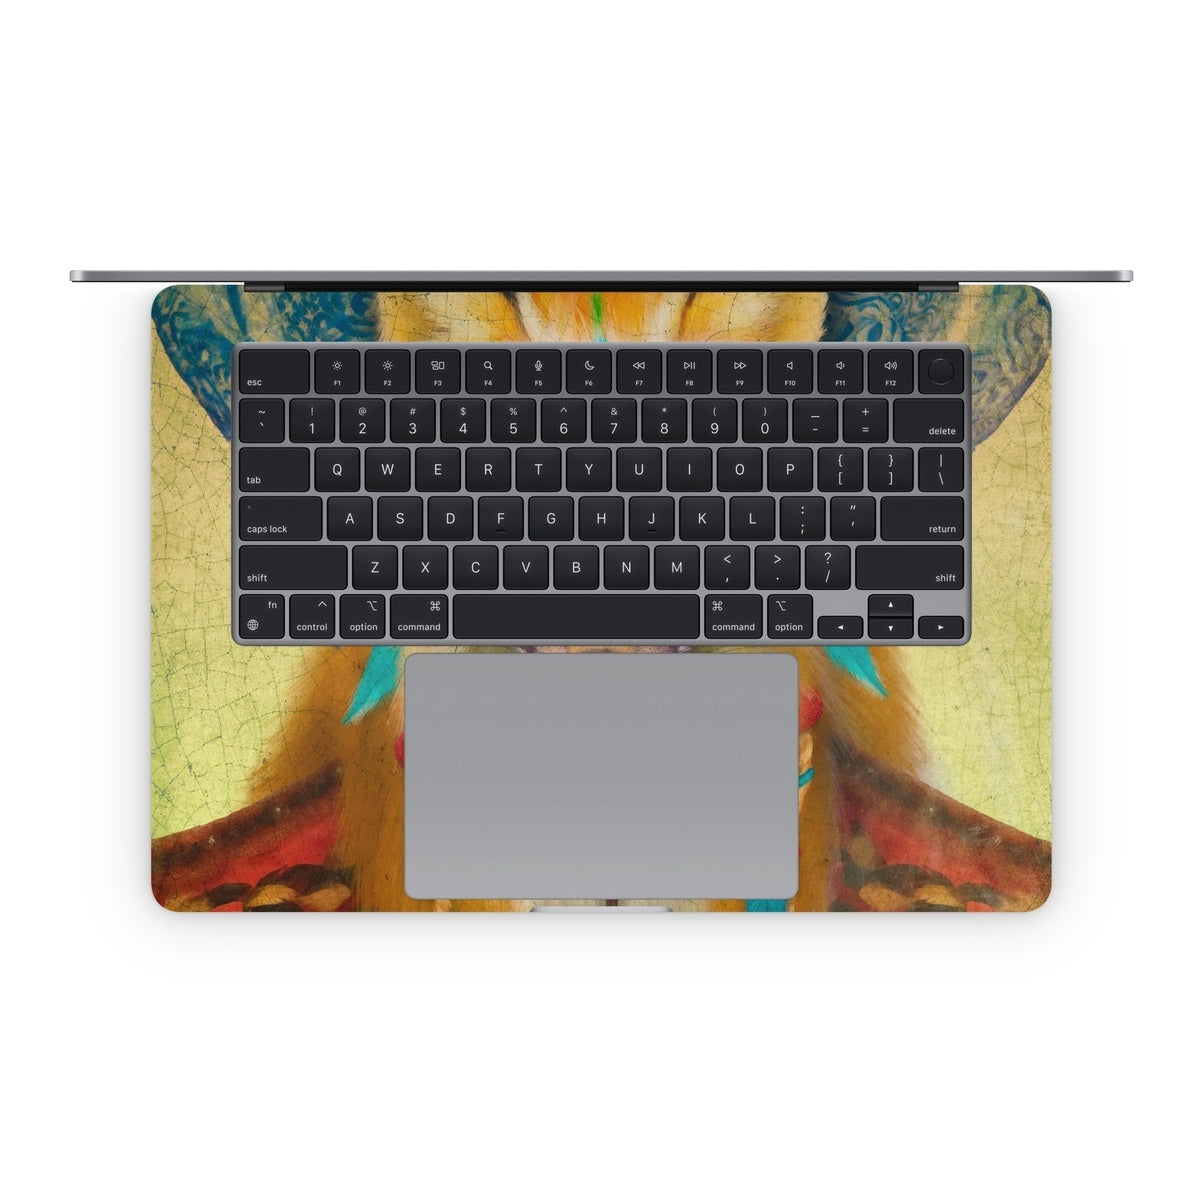 Wise Fox - Apple MacBook Skin